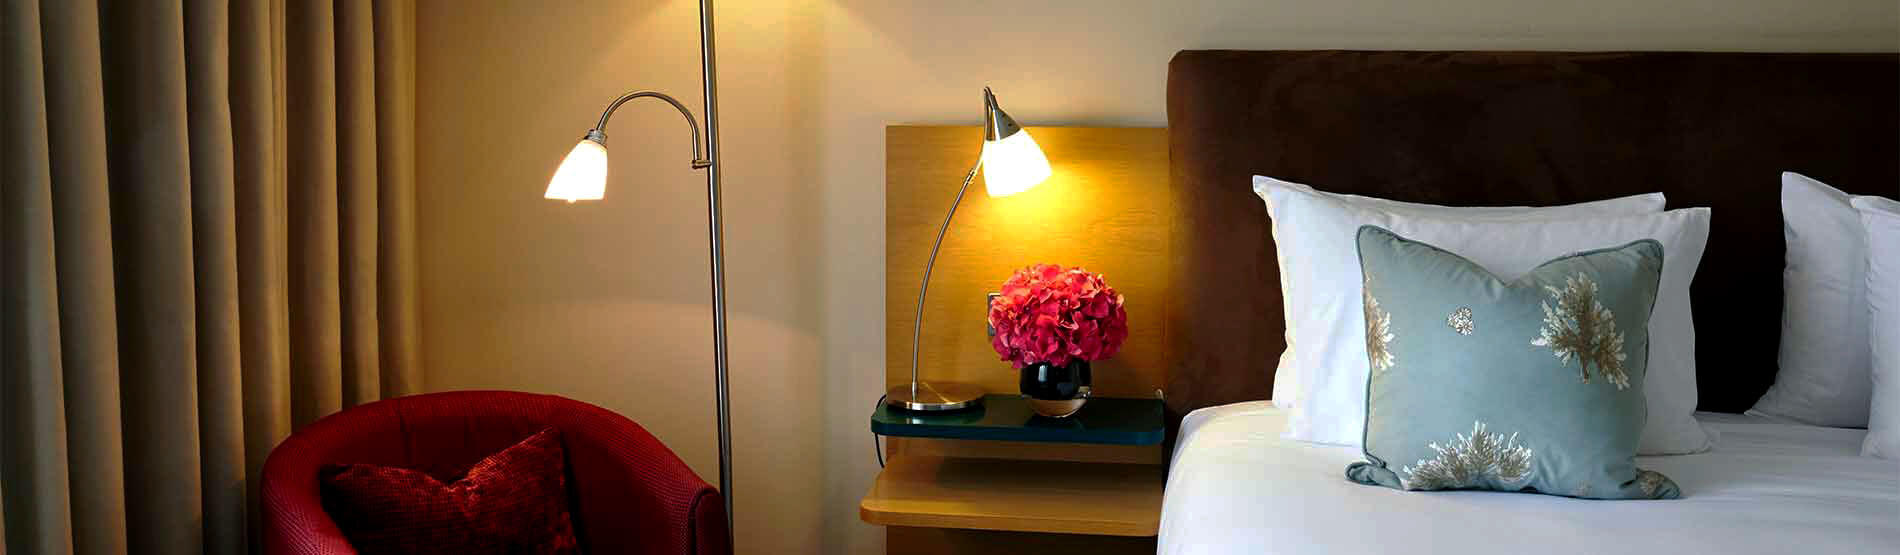 bedroom detail with bedside lamp and pink floral arrangement